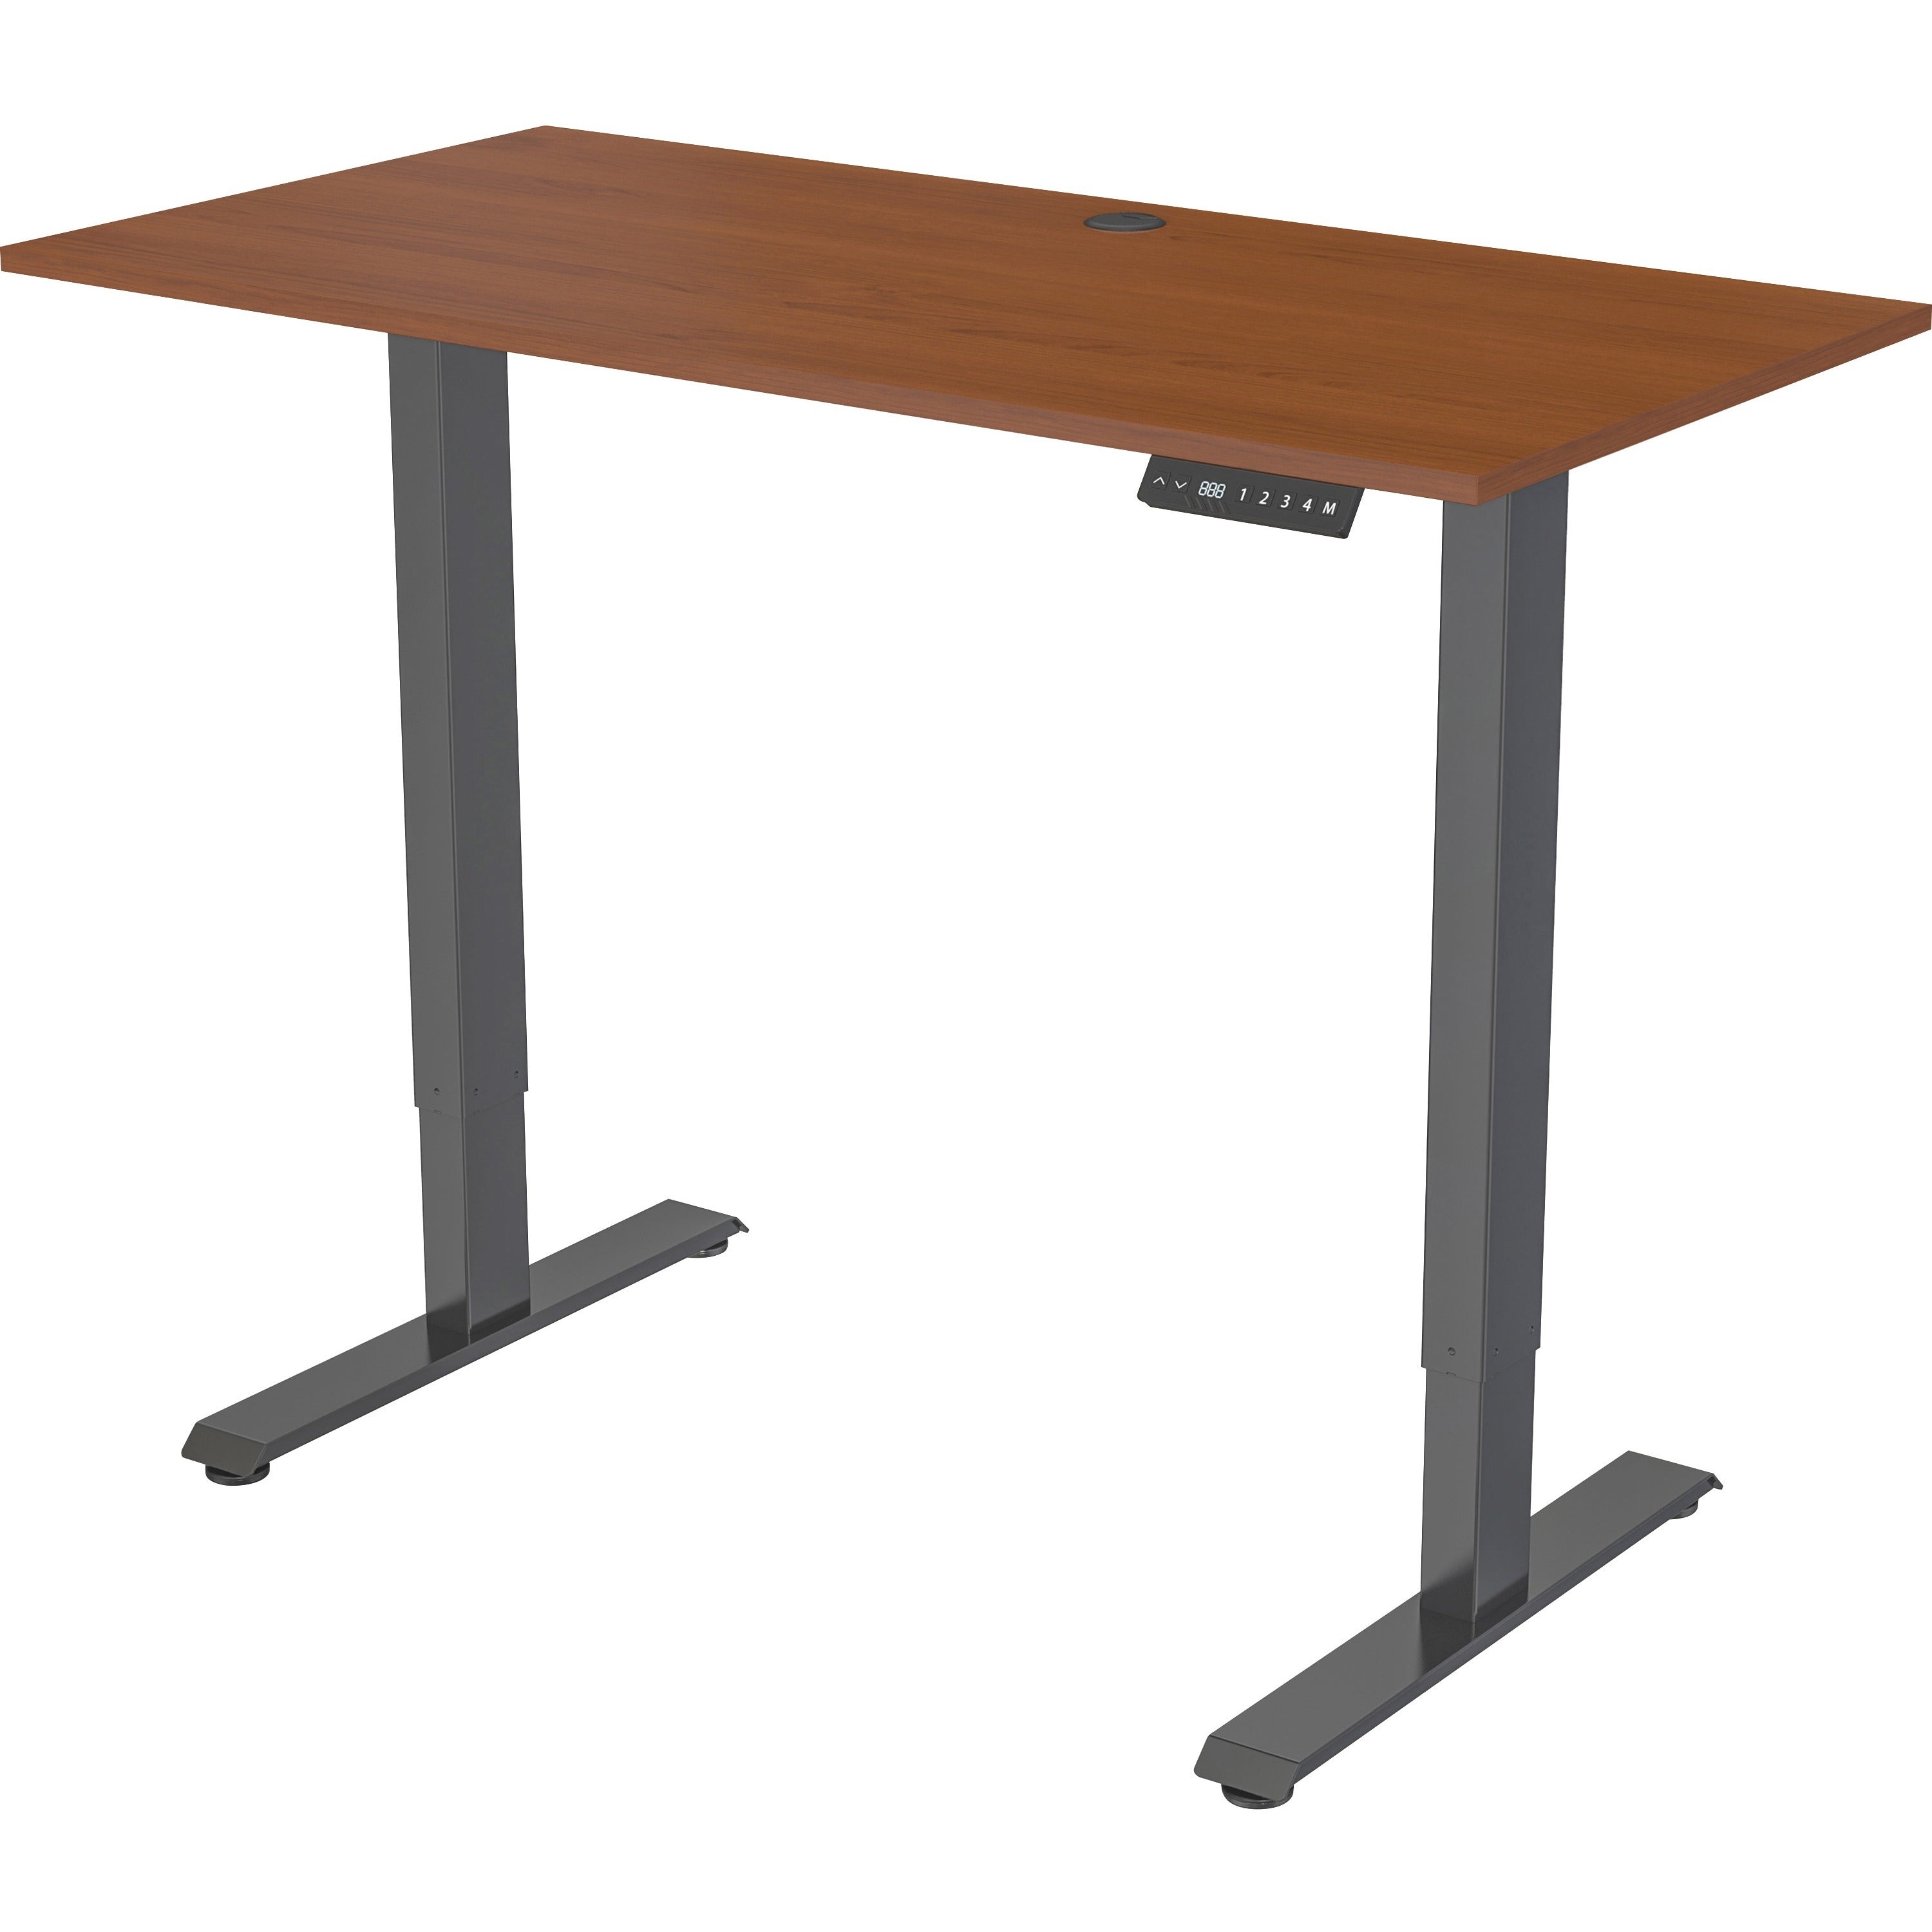 lorell-height-adjustable-2-motor-desk-for-table-topdark-walnut-rectangle-top-black-t-shaped-base-176-lb-capacity-adjustable-height-2890-to-4720-adjustment-48-table-top-length-x-24-table-top-width-x-070-table-top-thickness-472_llr03620 - 1